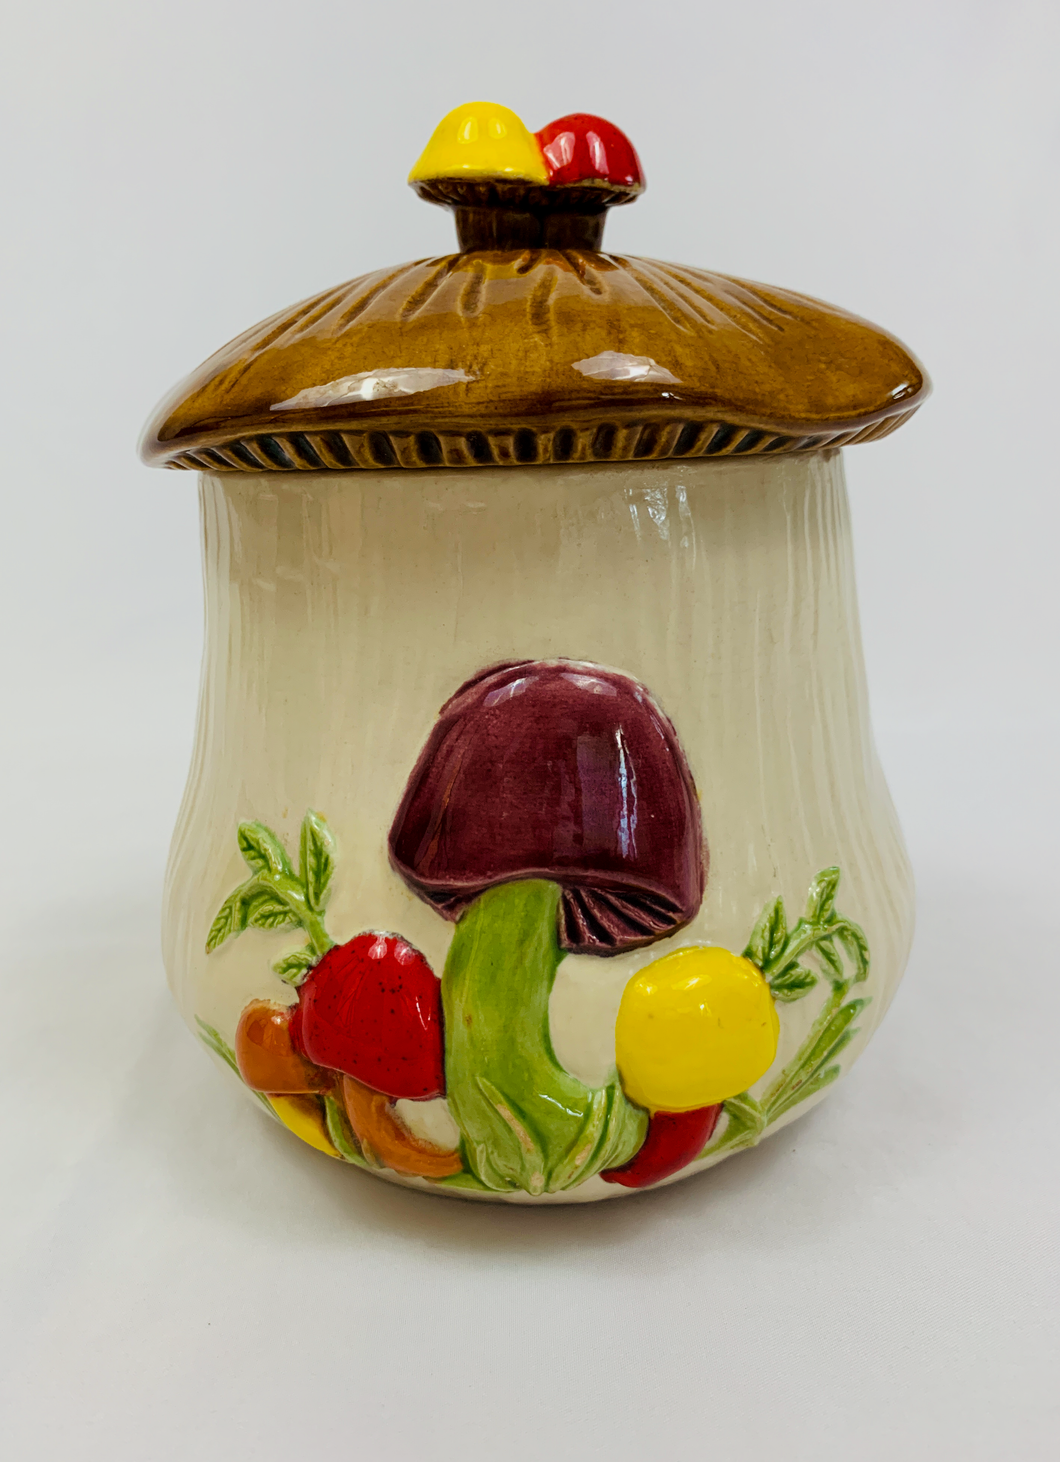 Mushroom Canister/ Cookie Jar by Arnel